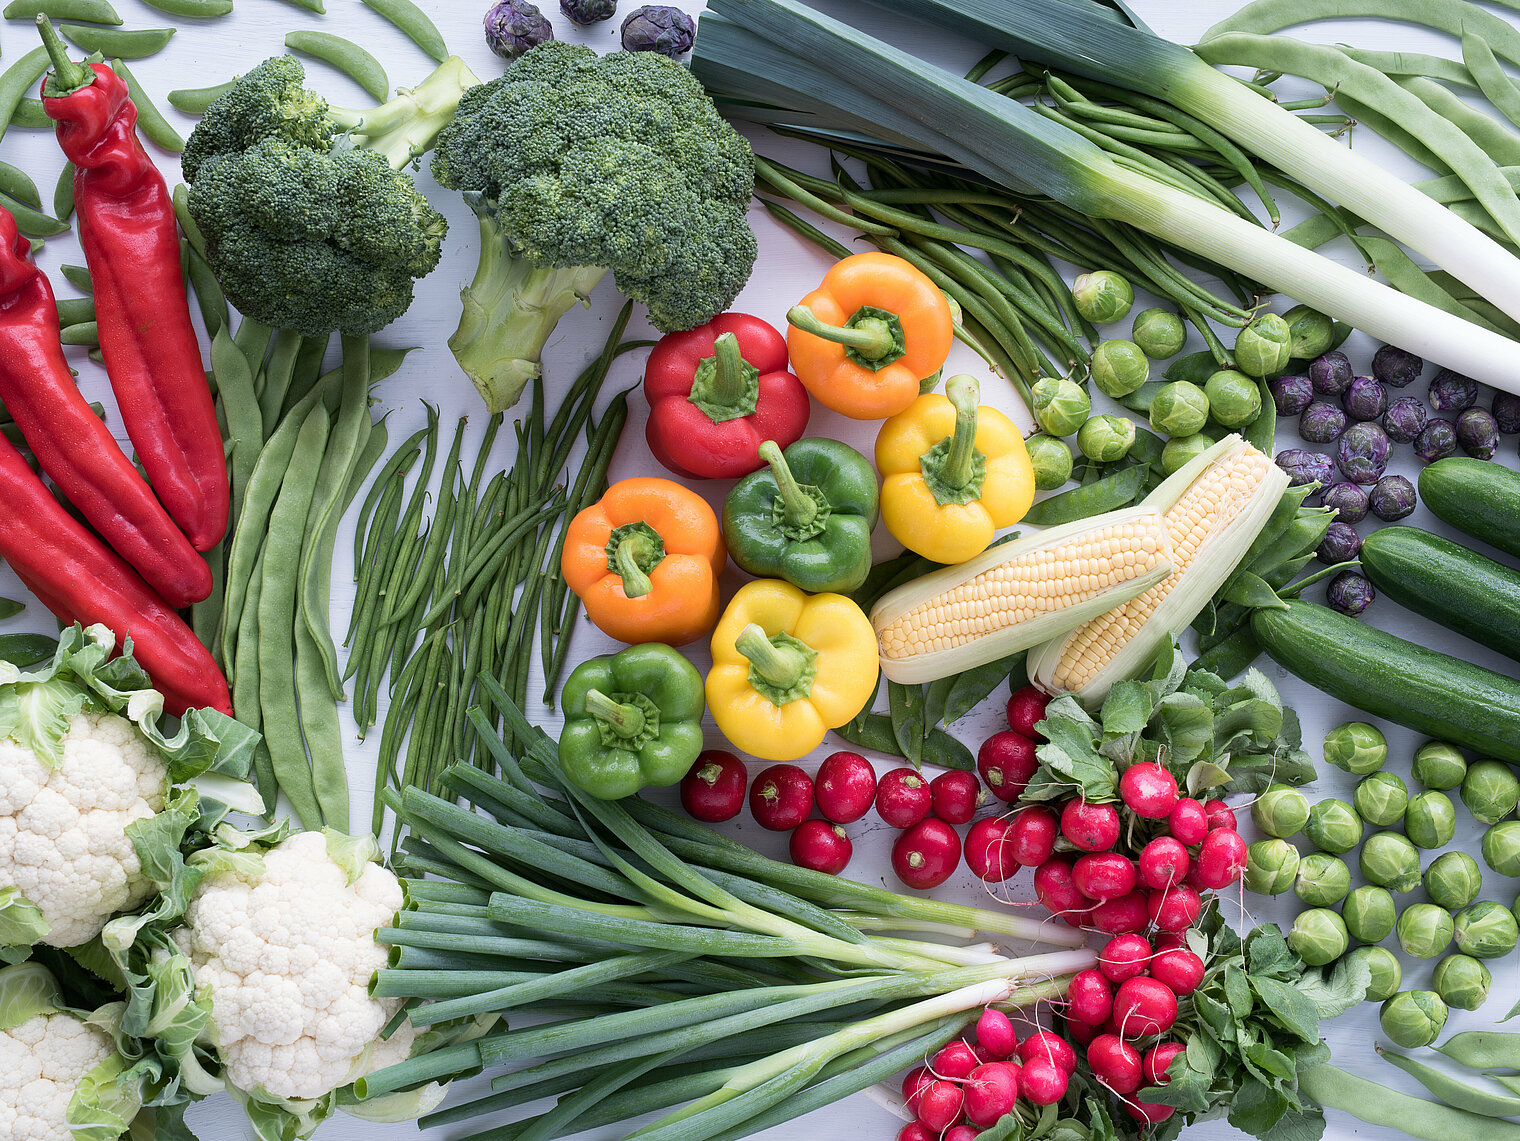 Enjoy healthy fresh vegetables daily